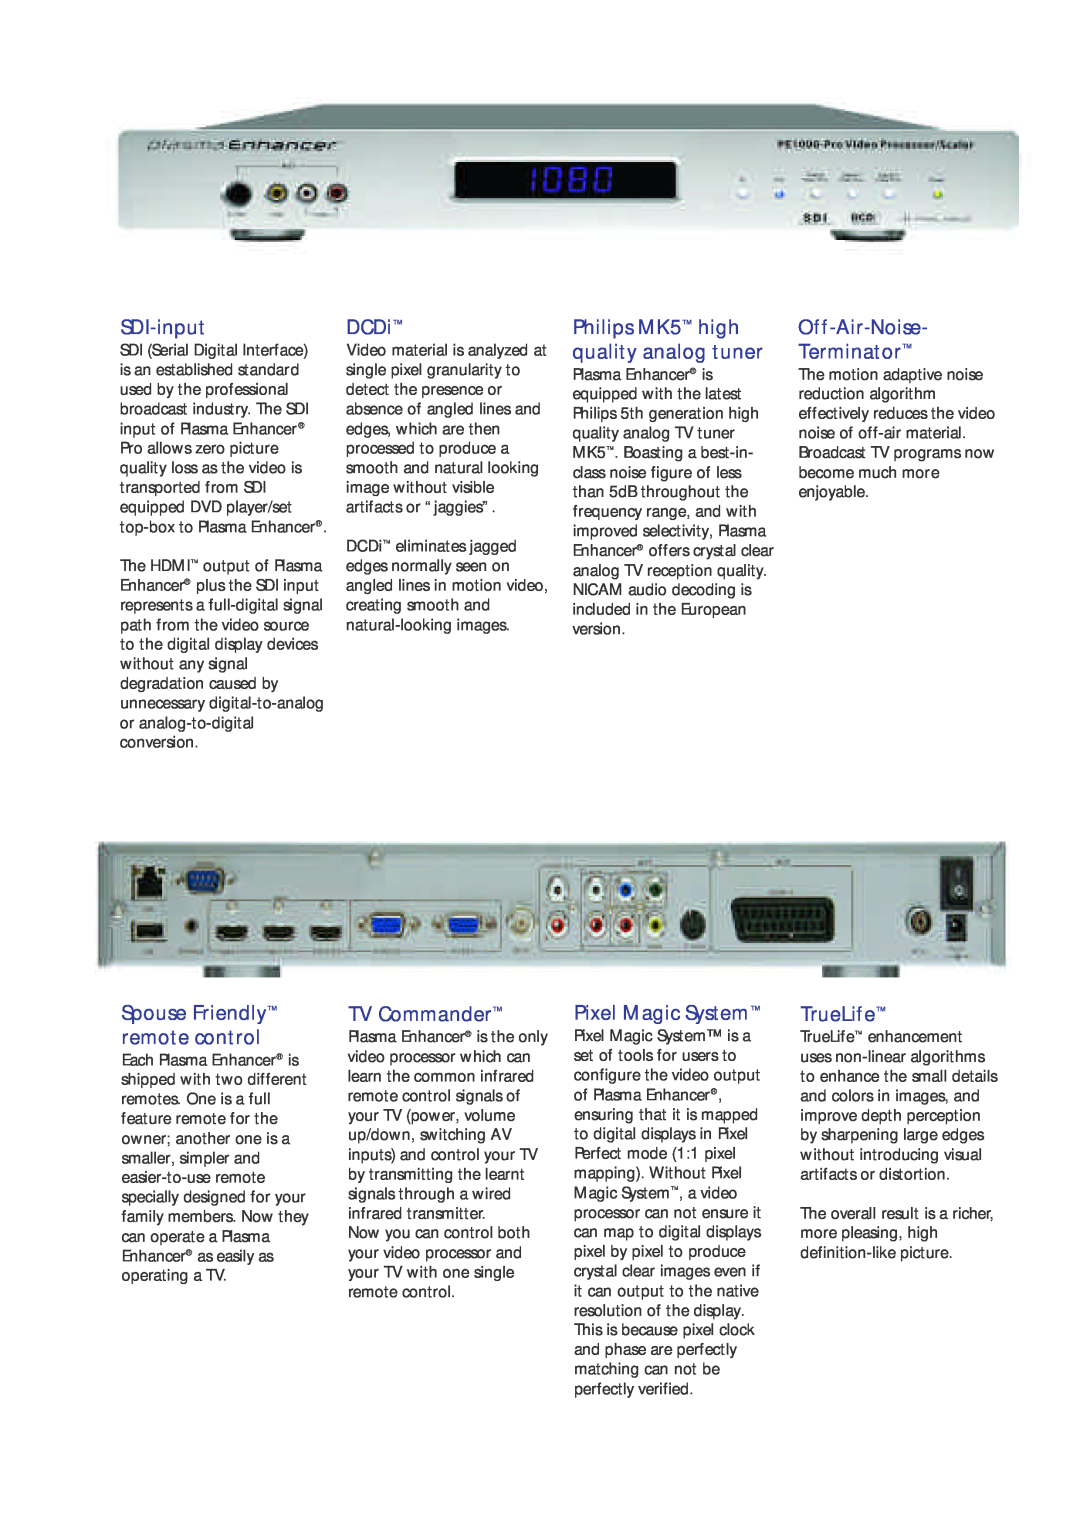 Pixel Magic Systems PE 1000 Pro SDI-input, DCDi, Philips MK5 high quality analog tuner, Off-Air-Noise Terminator, TrueLife 